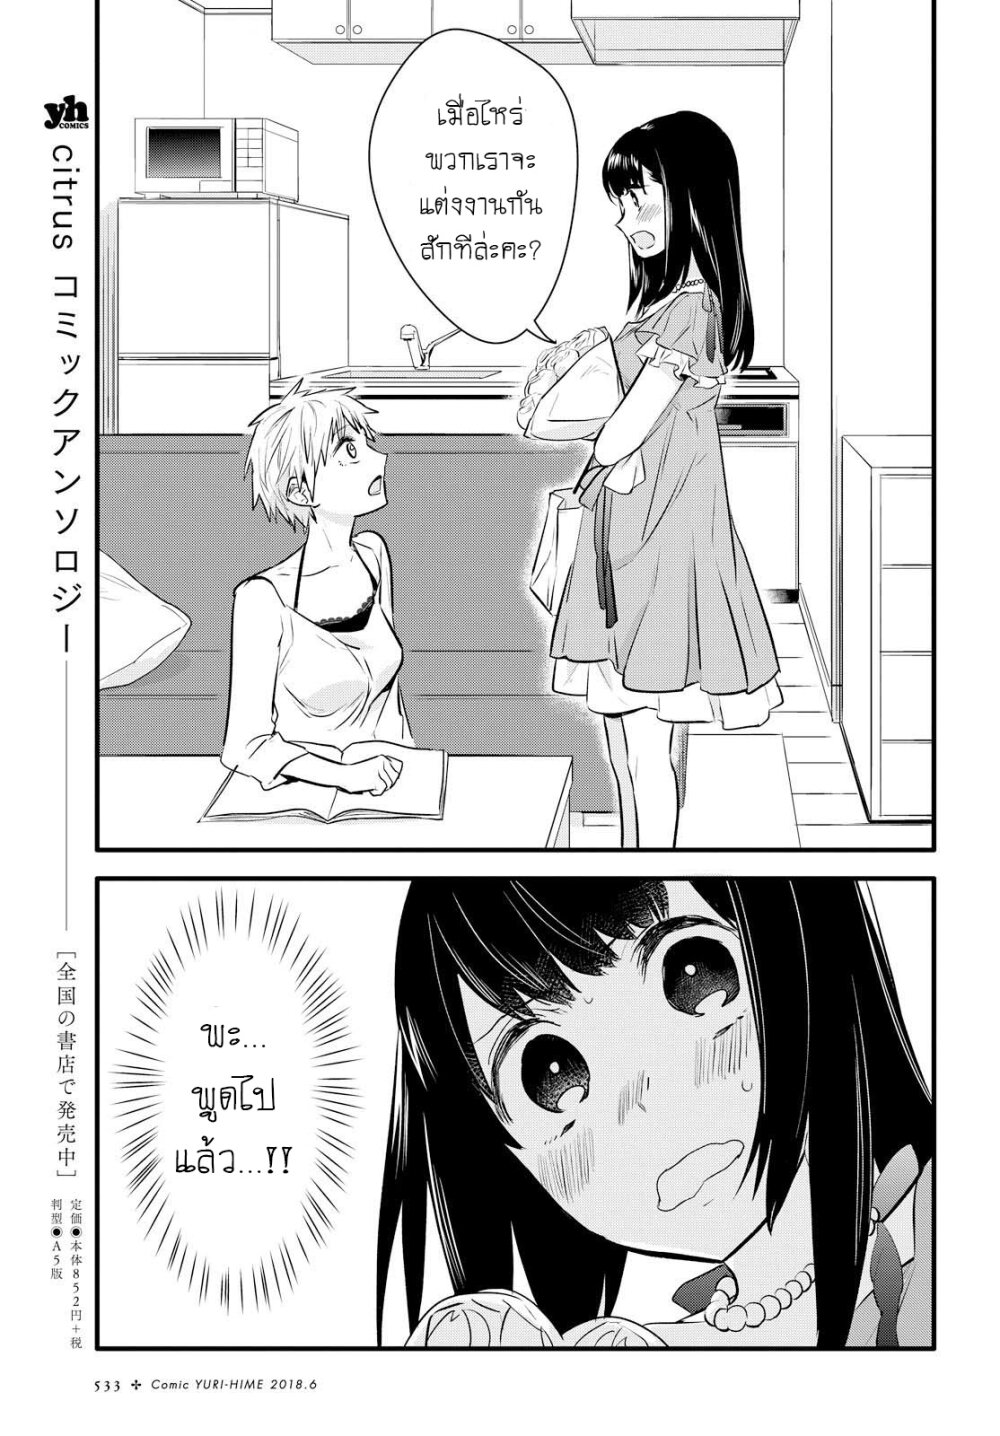 manga yuri Yurikon 2 (3)